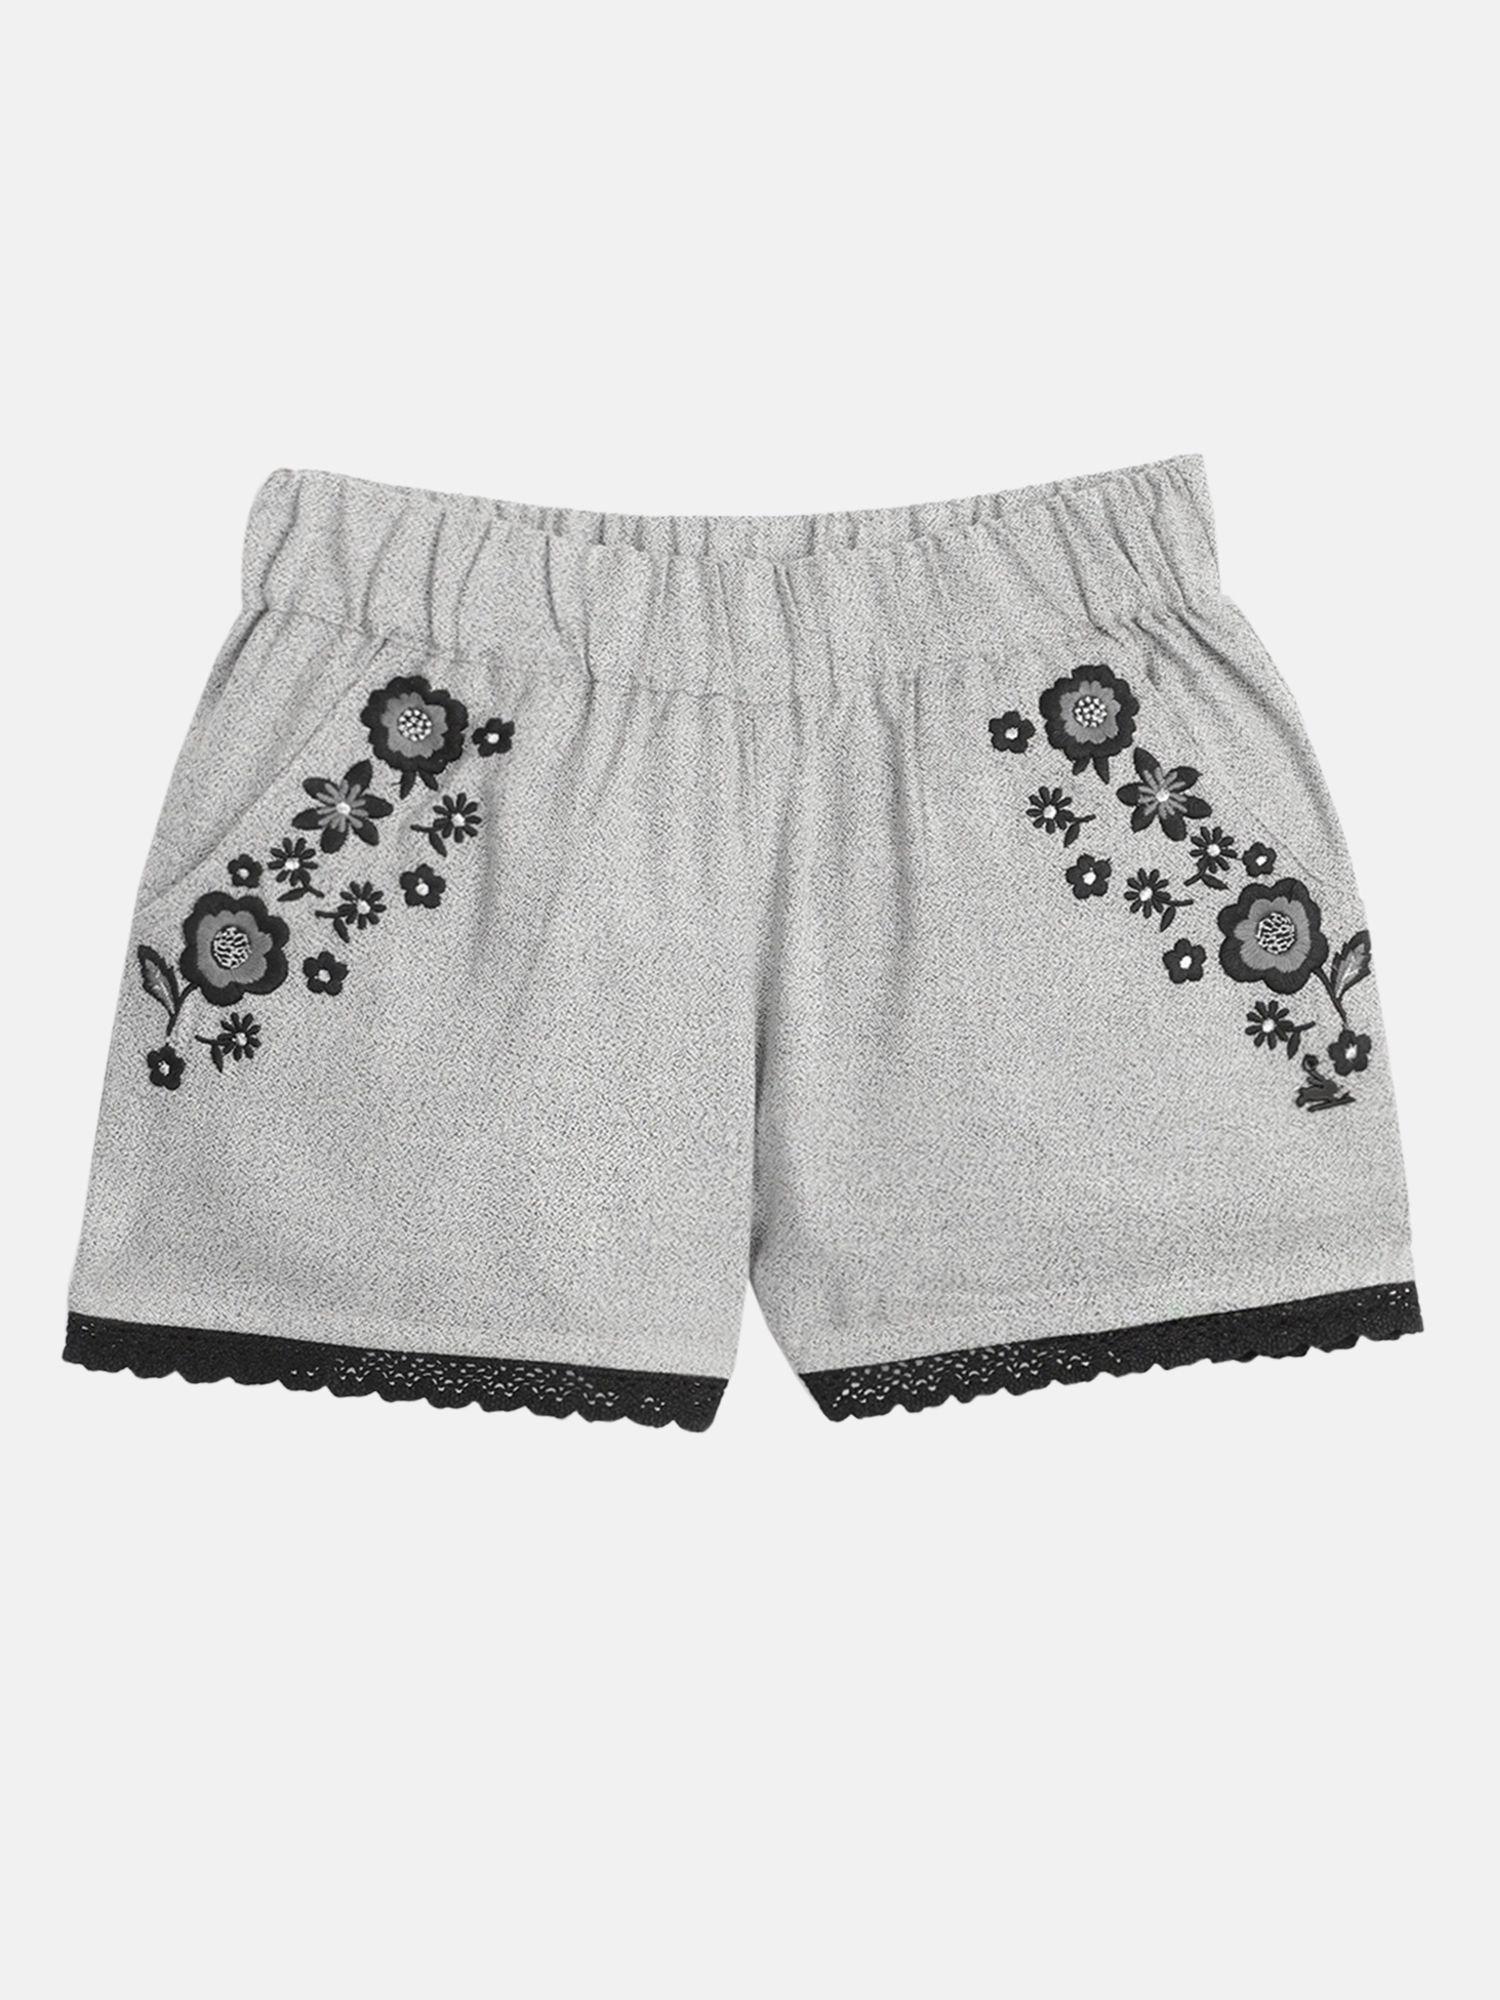 grey crisp floral shorts